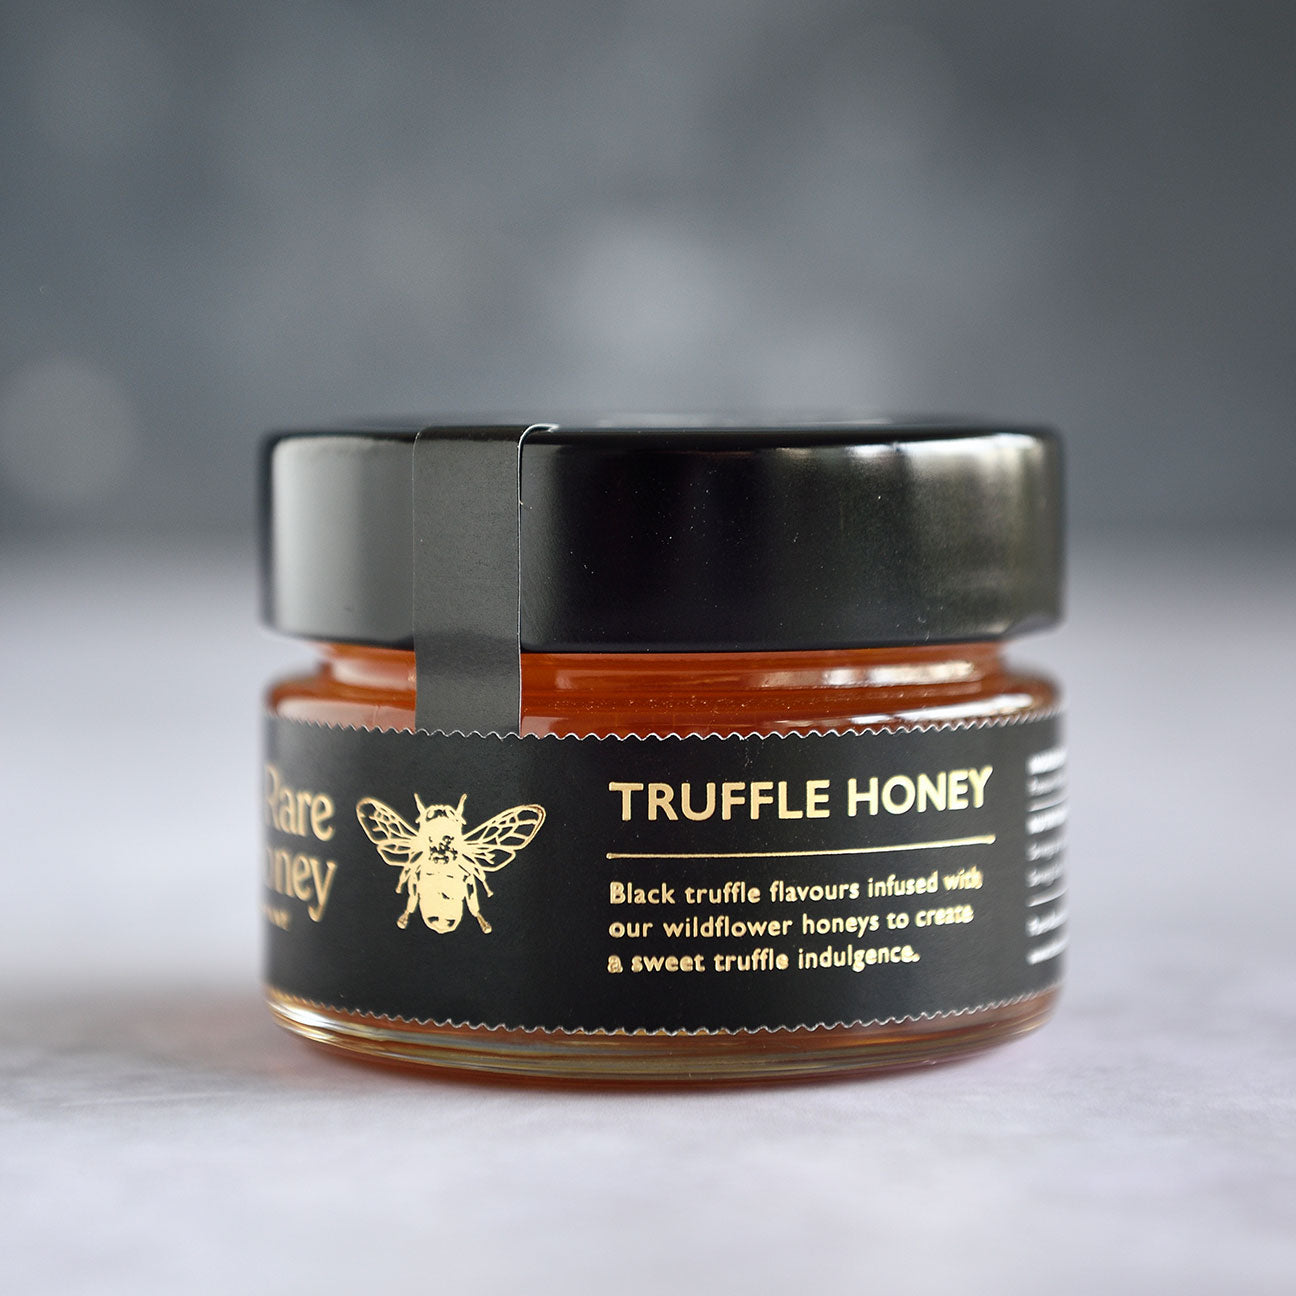 Black Truffle Honey